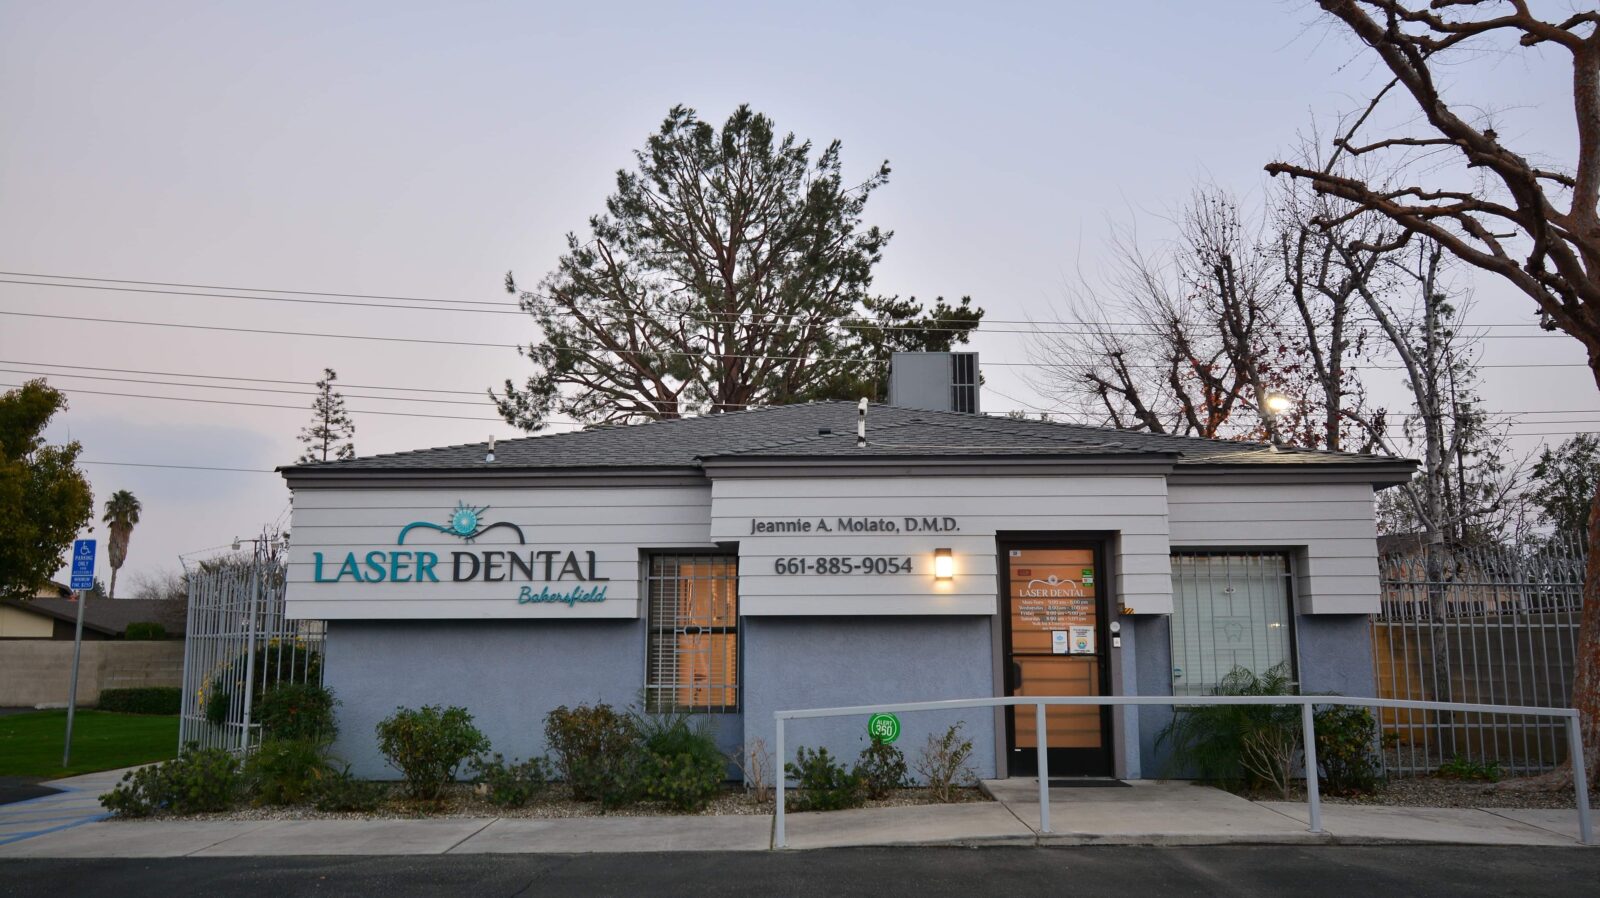 Office front view - Laser Dental Bakersfield